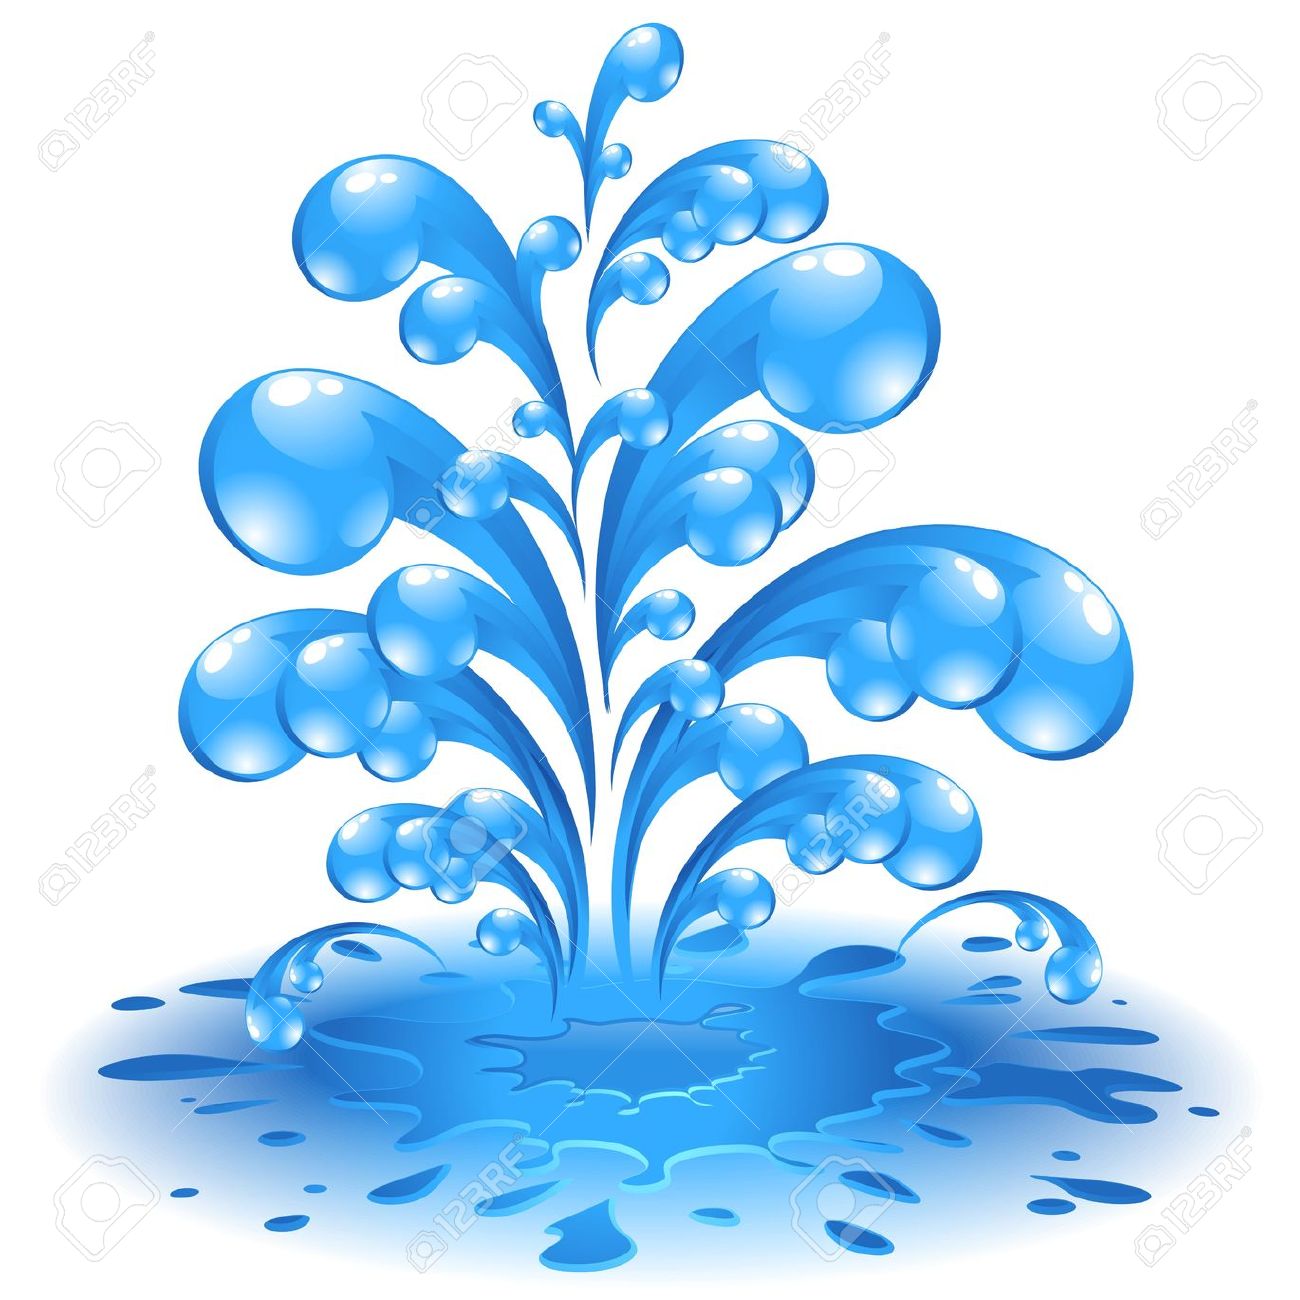 Fountain clipart. Blue water 